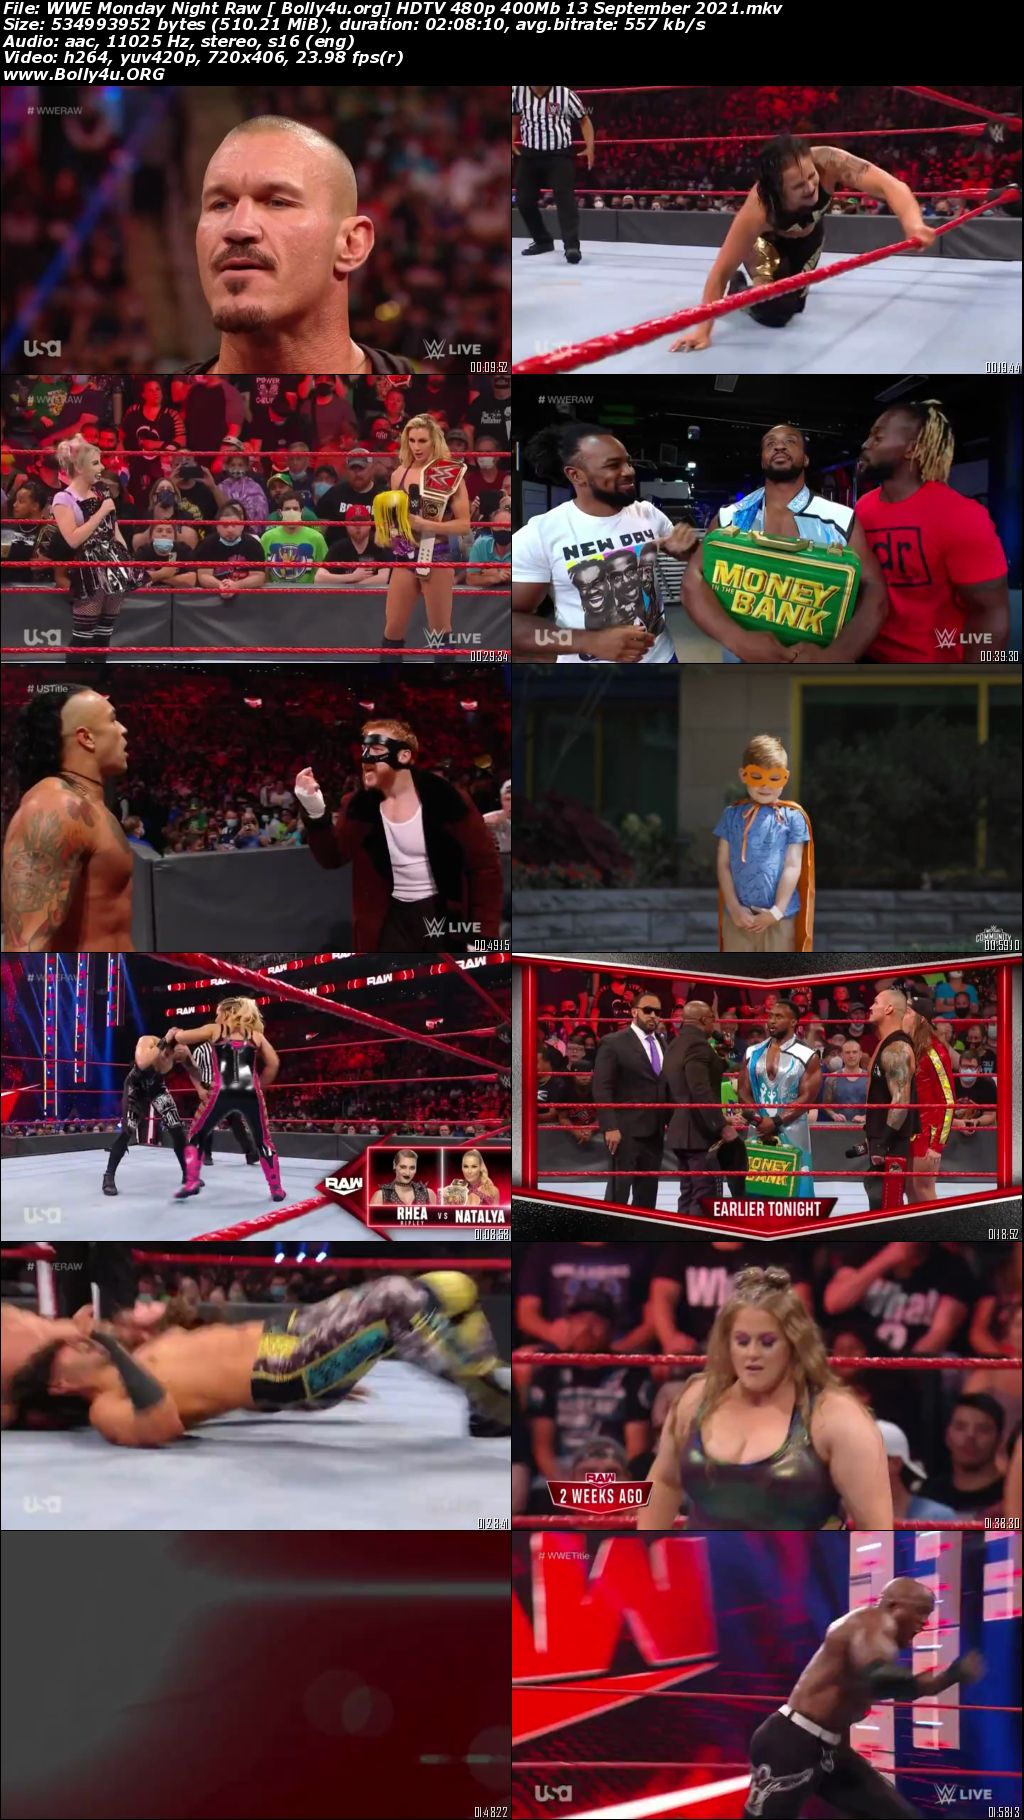 WWE Monday Night Raw HDTV 480p 400Mb 13 September 2021 Download